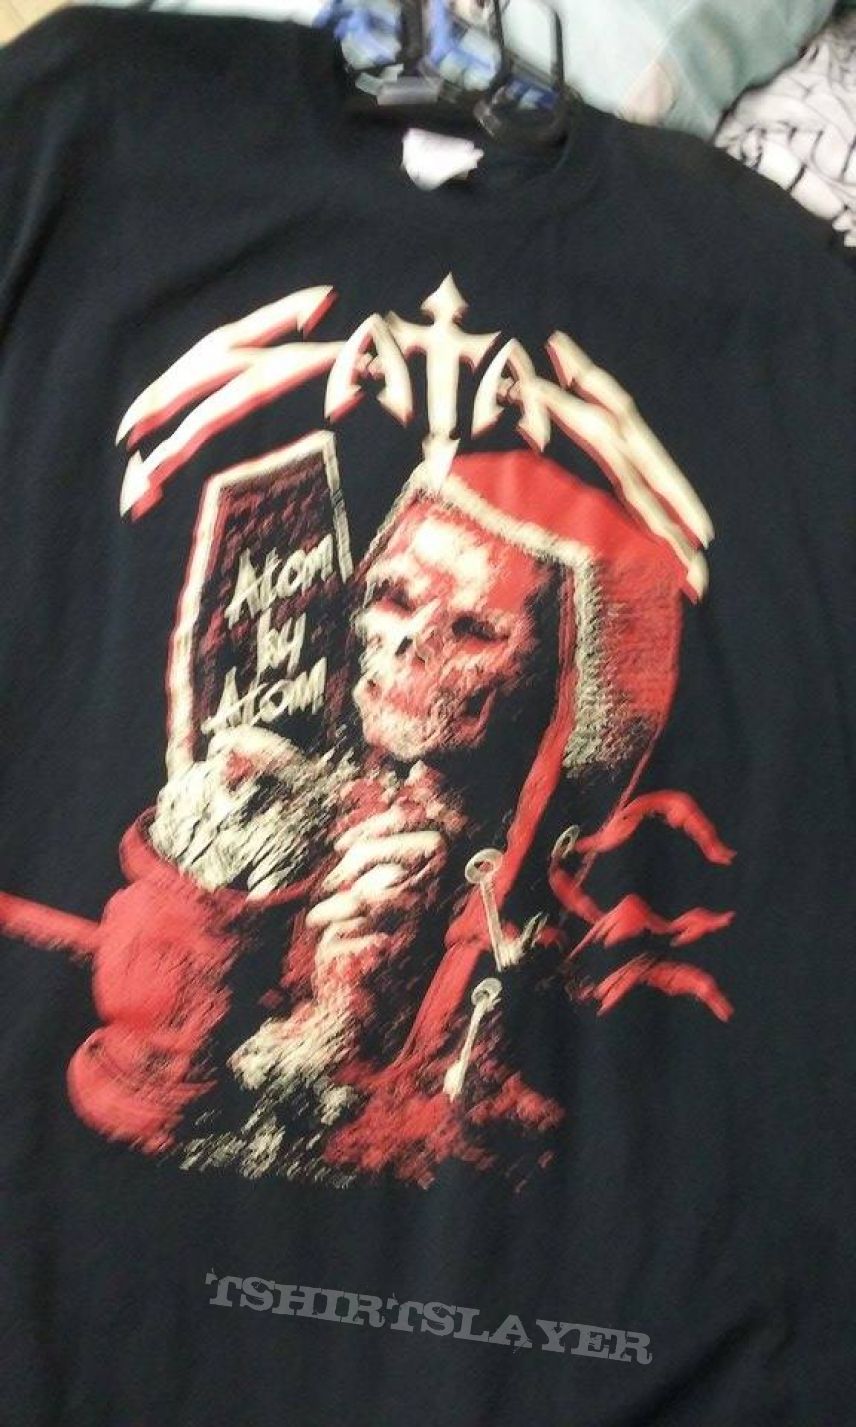 Satan shirt